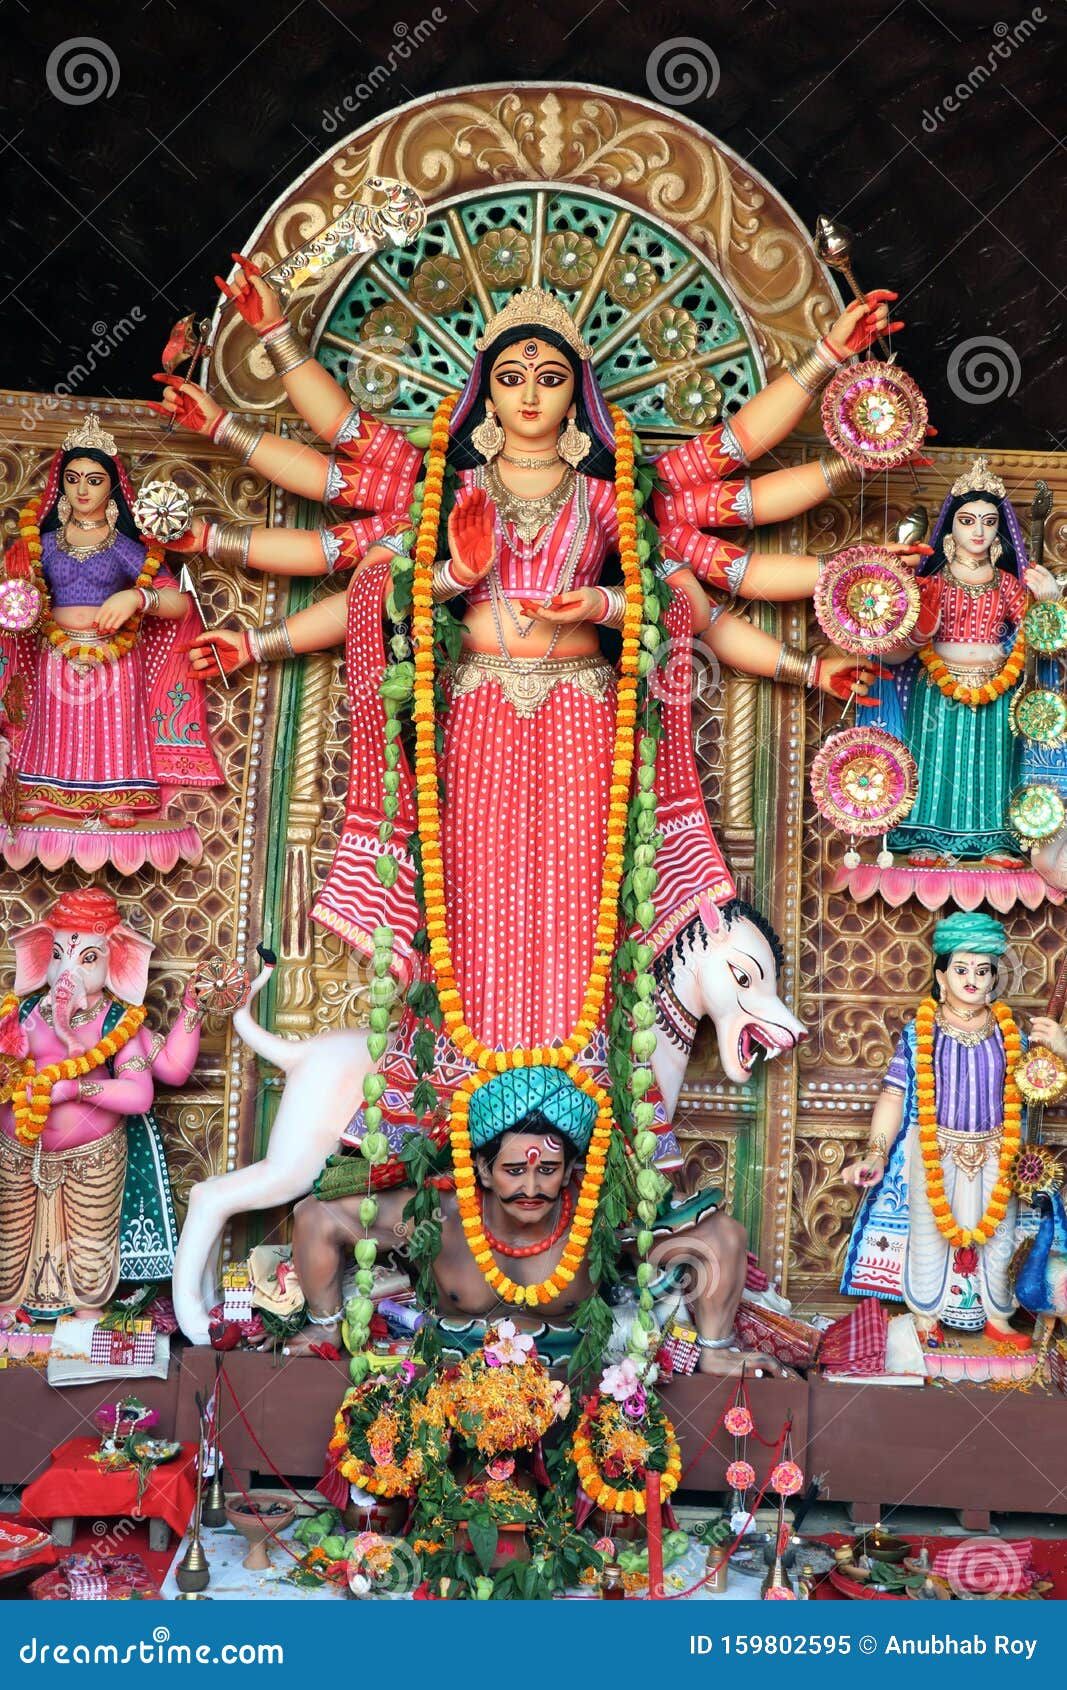 Maa Durga Sculpture. Durga Puja Festival in Kolkata, West Bengal ...